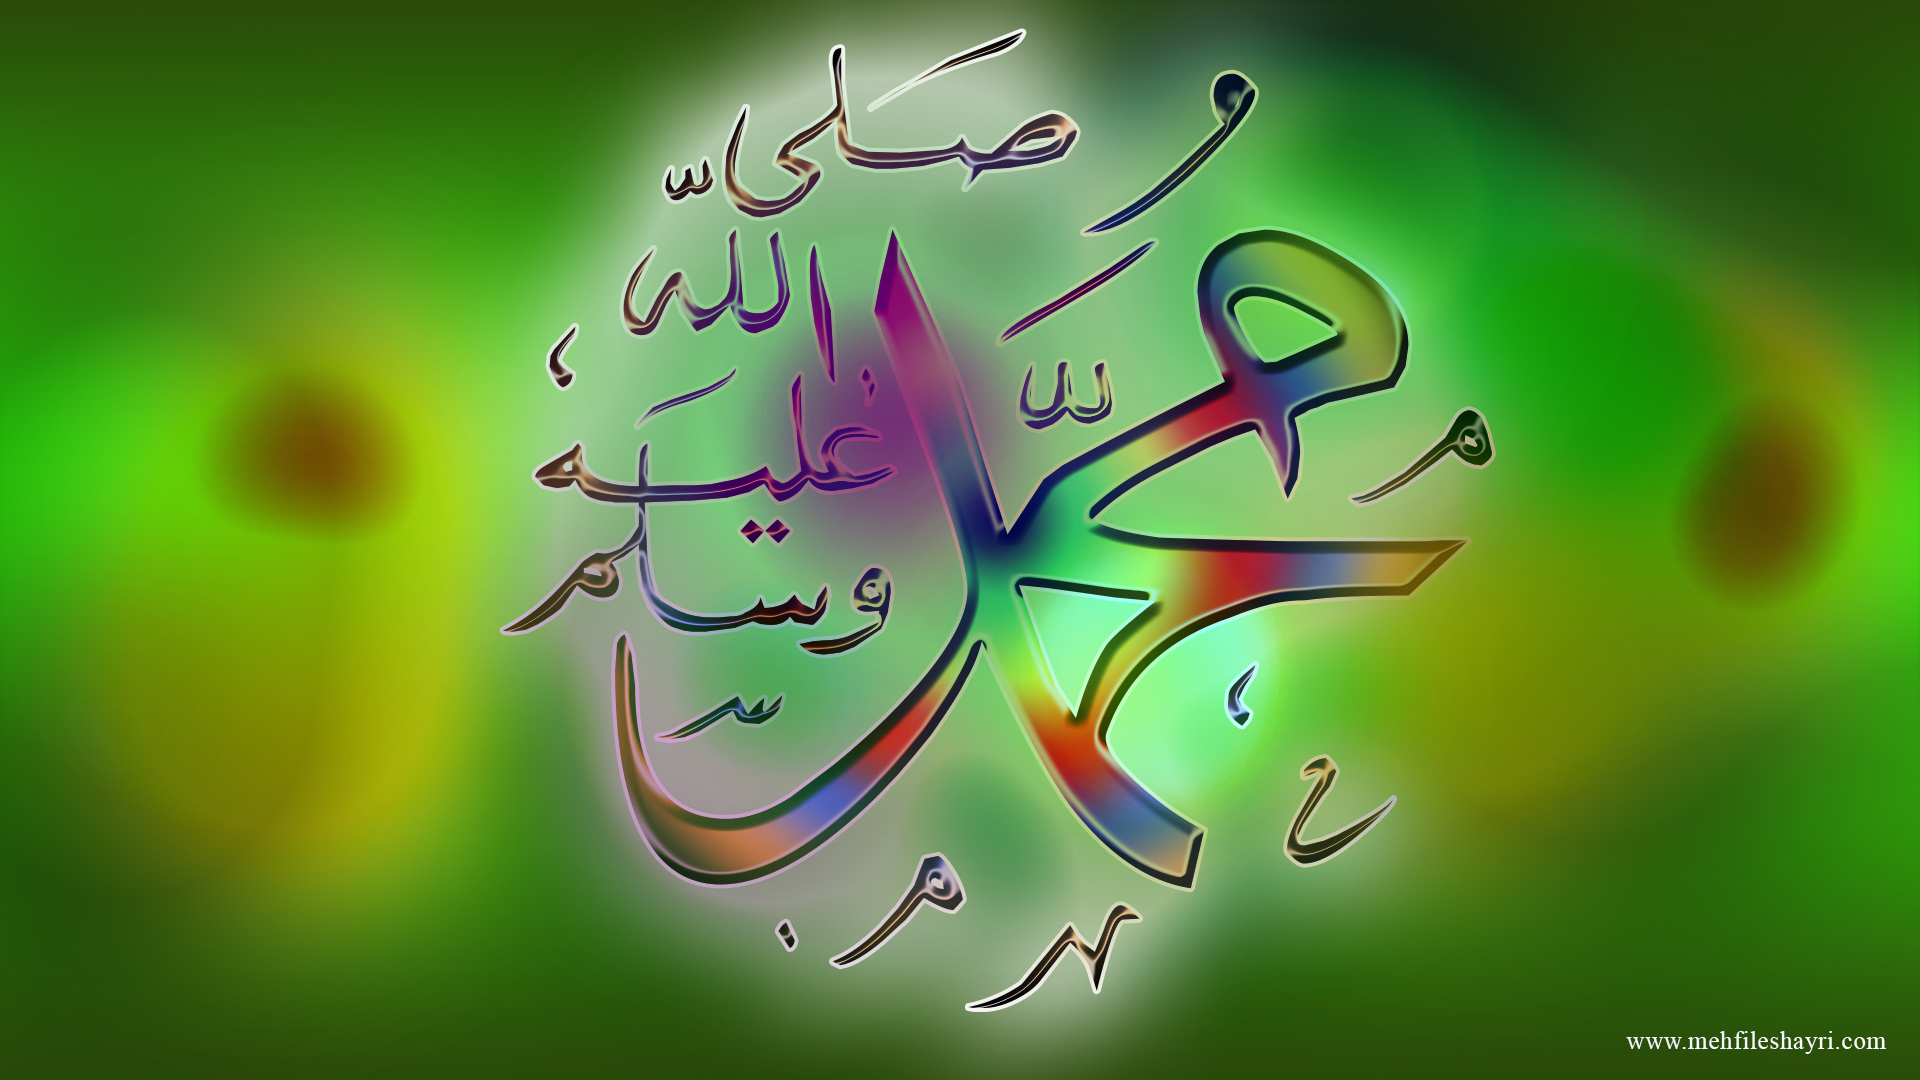 Islamic Img - HD Wallpaper 